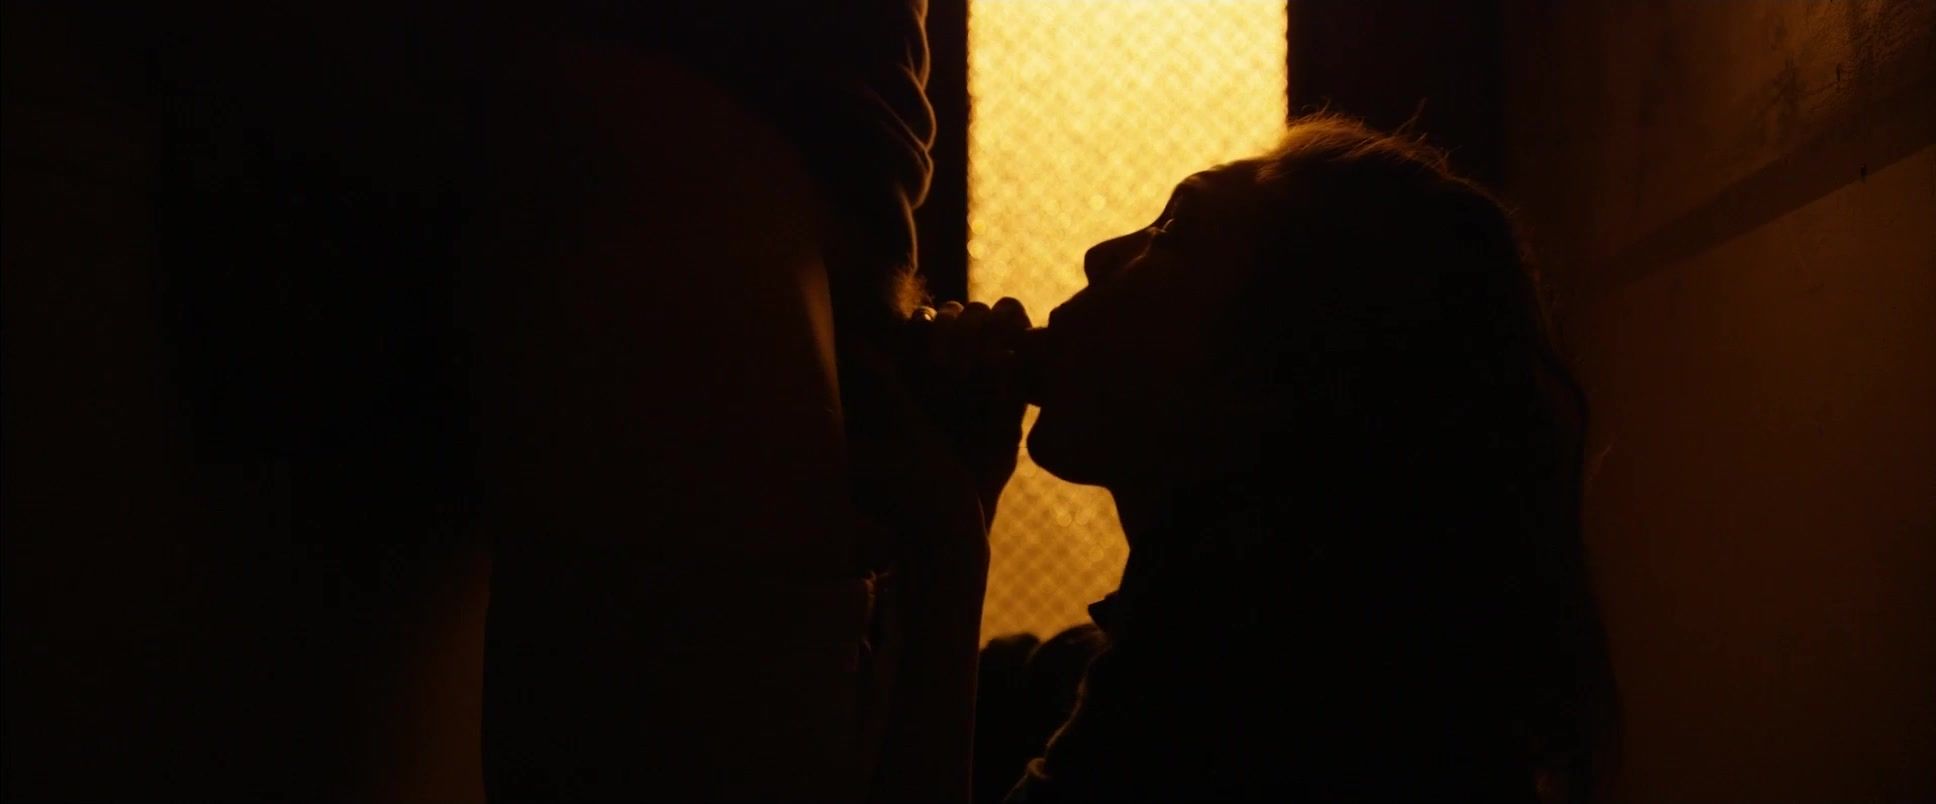 Slut Best Mainstream Adult Film | Explicit Uncensored Sex Scenes of the movie "Love" Verified Profile